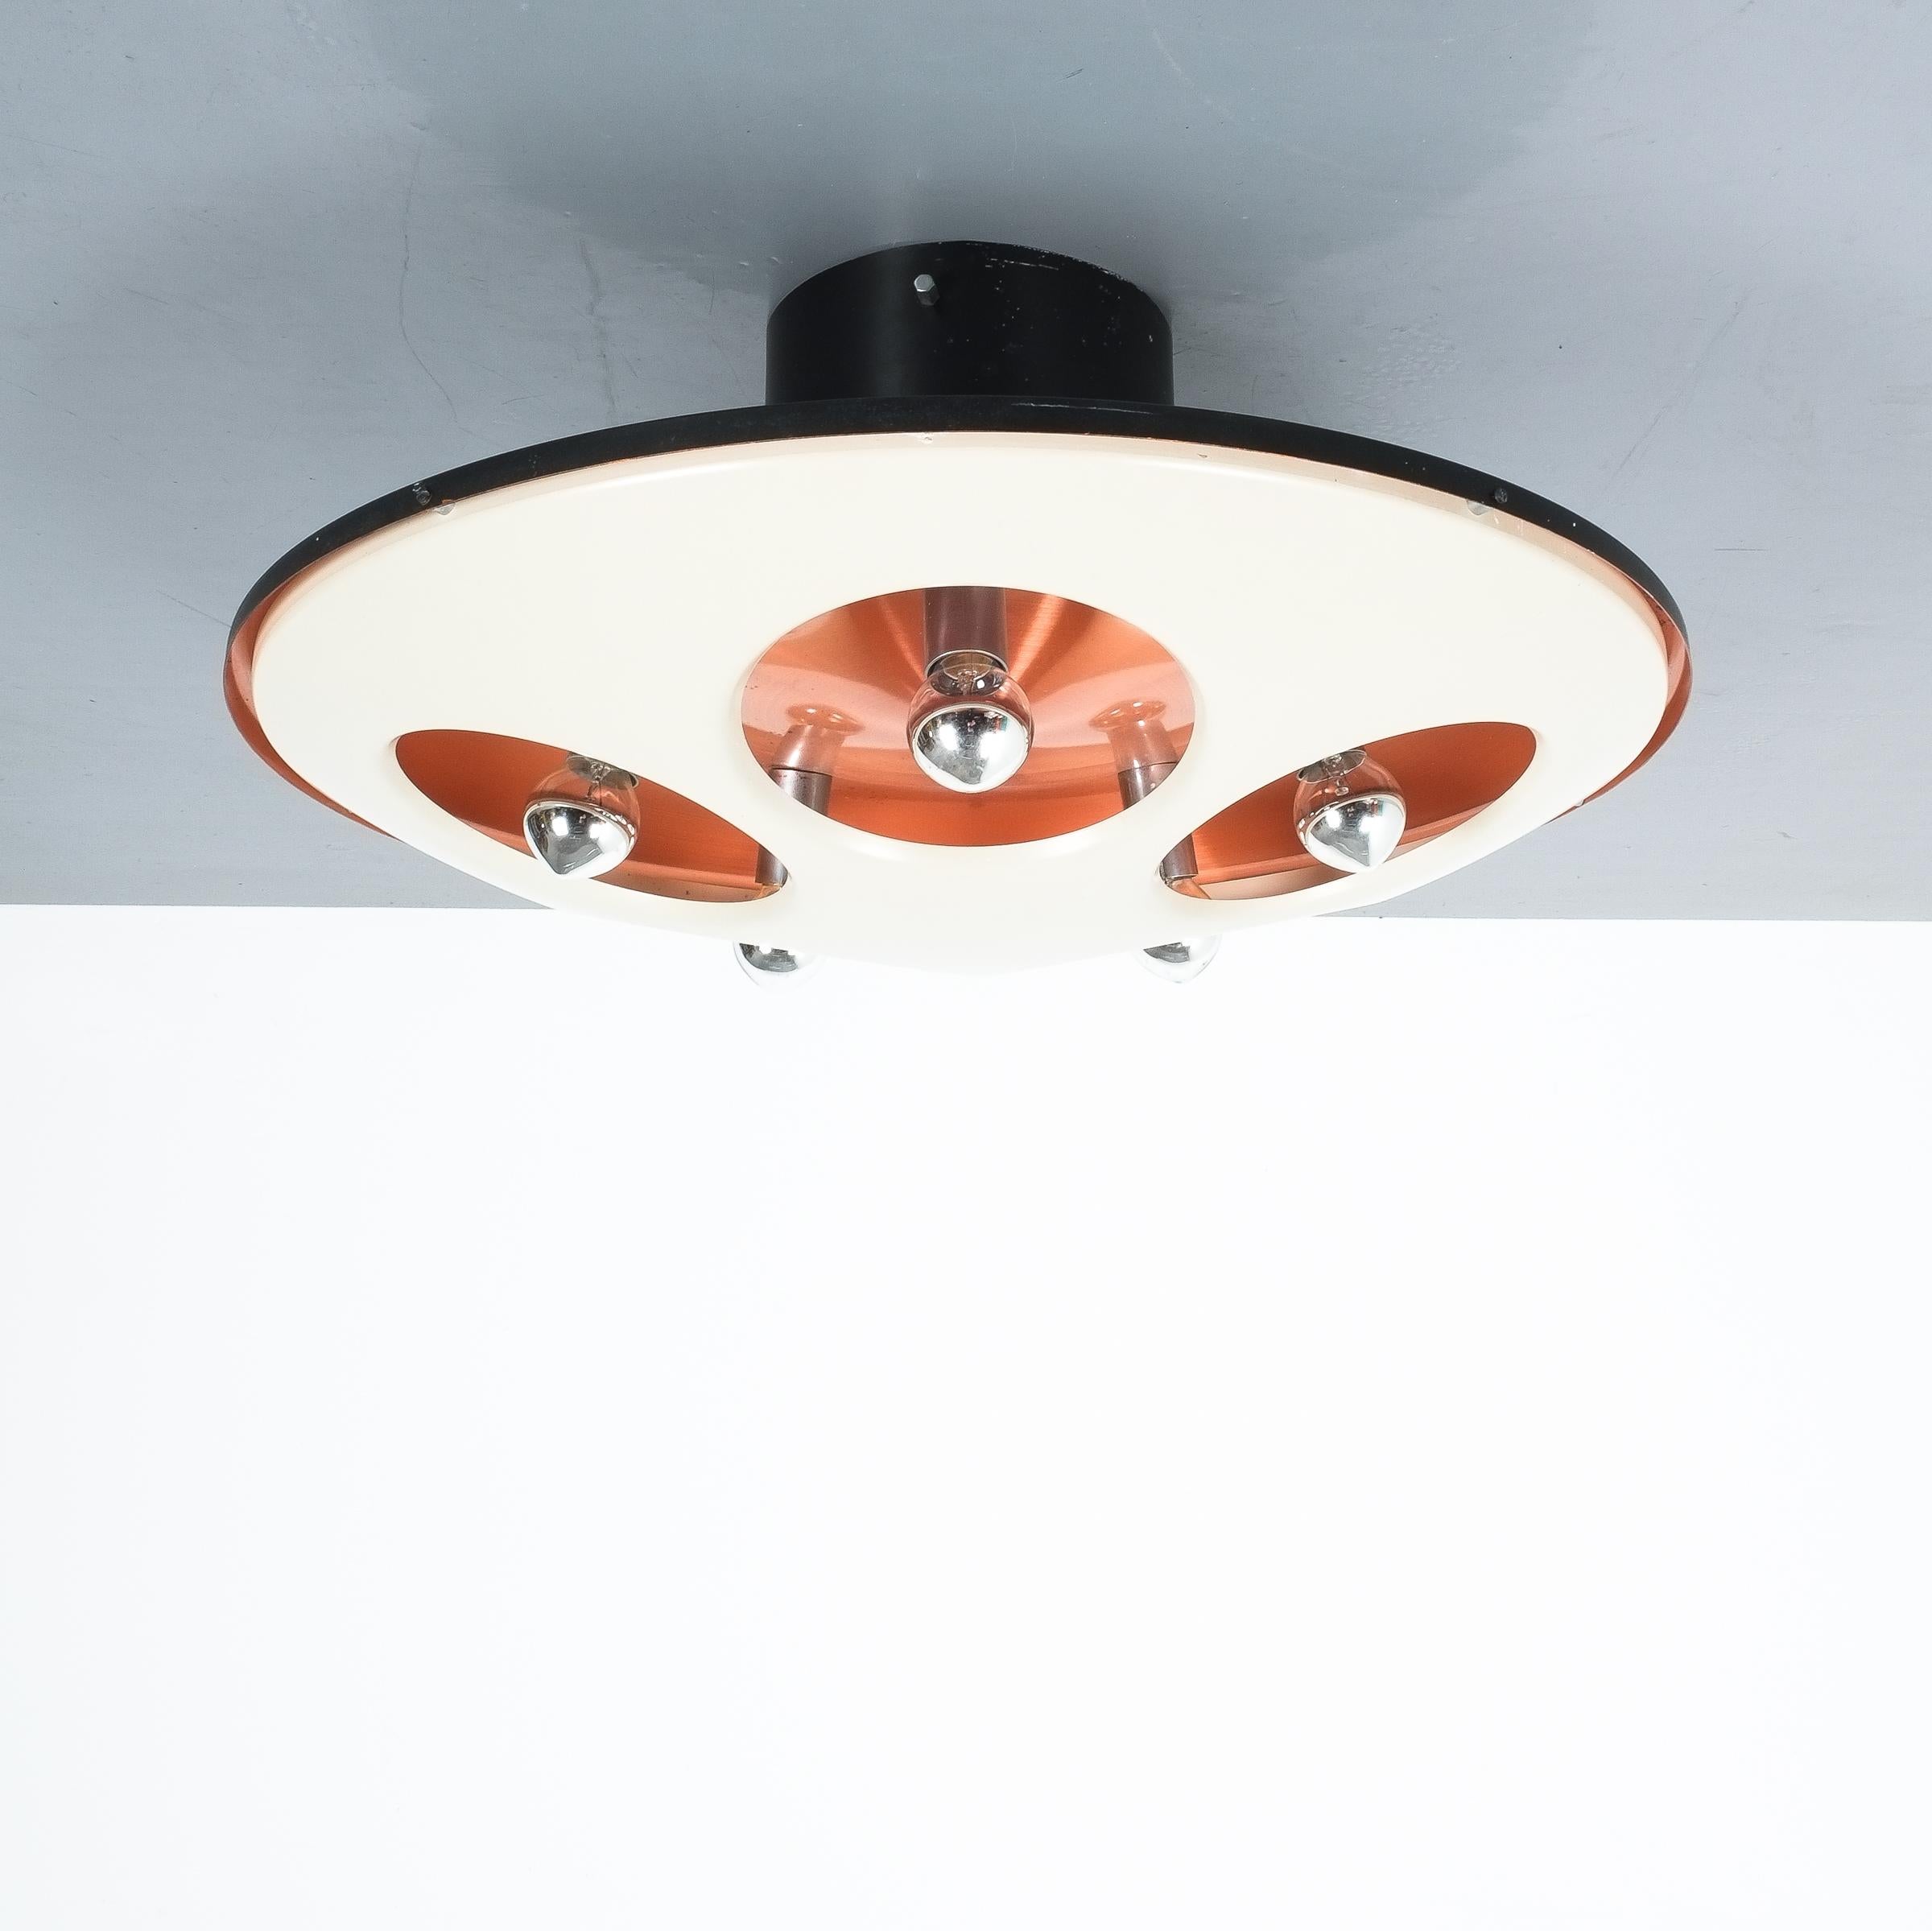 Stilnovo 1243 ceiling lamp or semi flush mount, Italy, 1960

Stylish 23